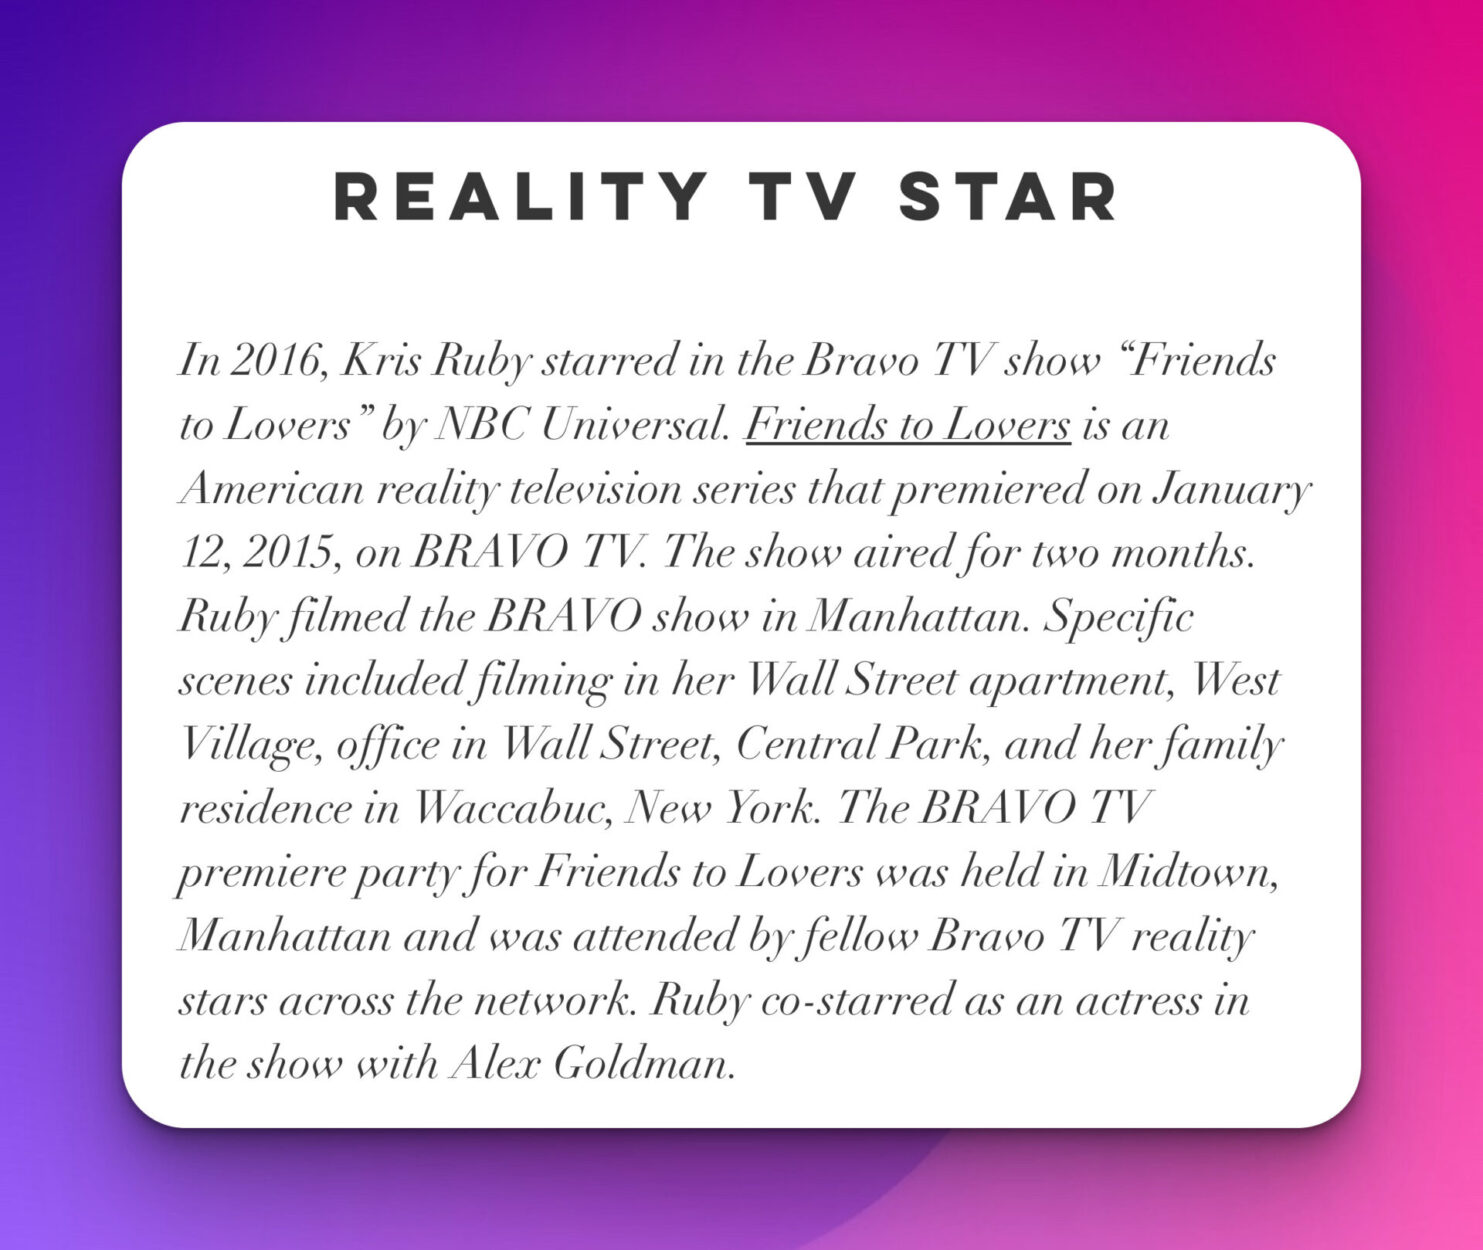 reality tv star American actress bravo tv Kristen Ruby 